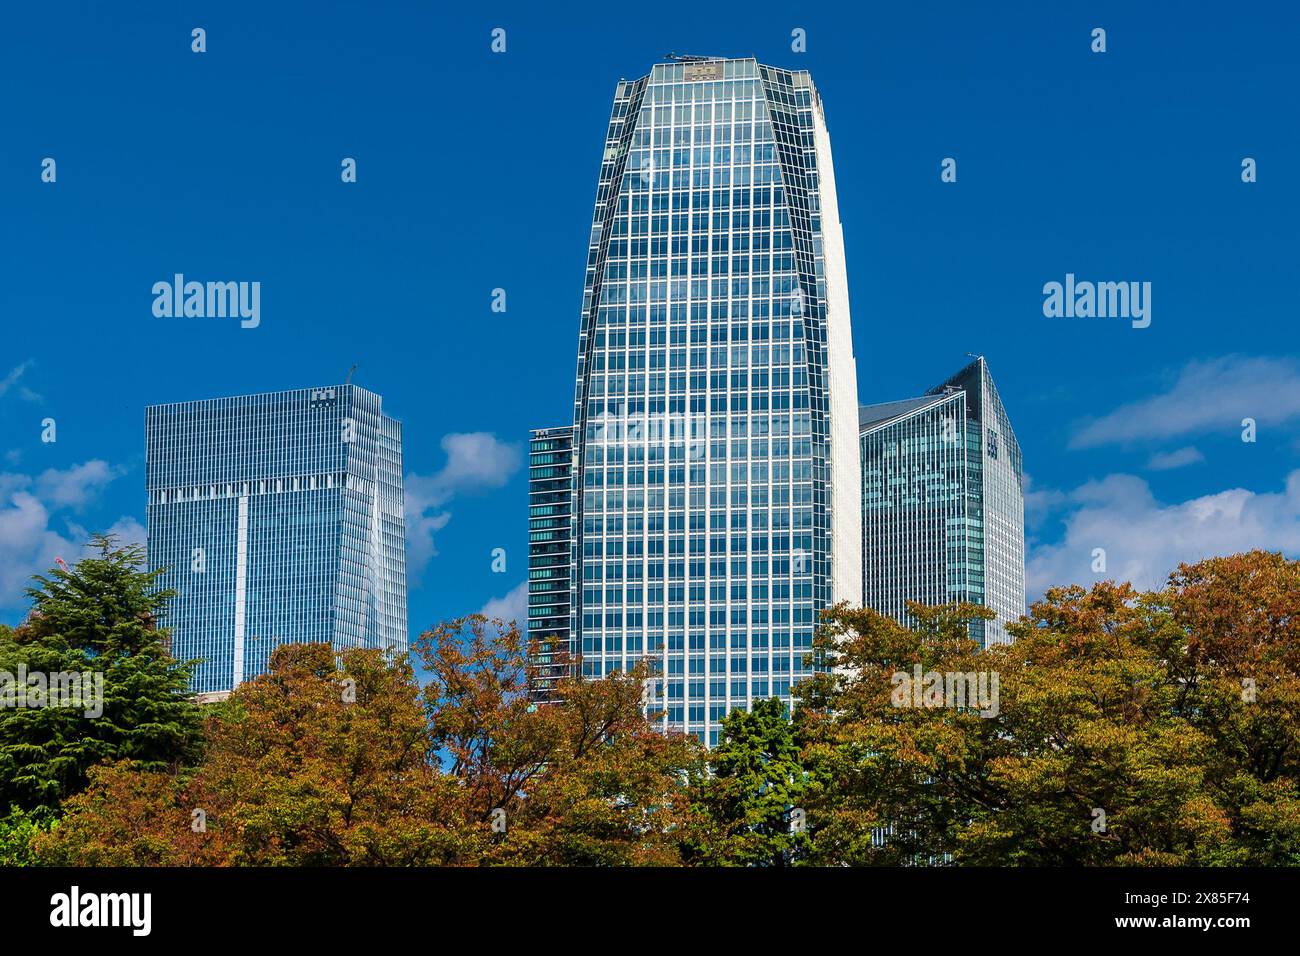 Moder narchitecture in Japan. Minato Ward skyscrapers in Tokyo Stock Photo